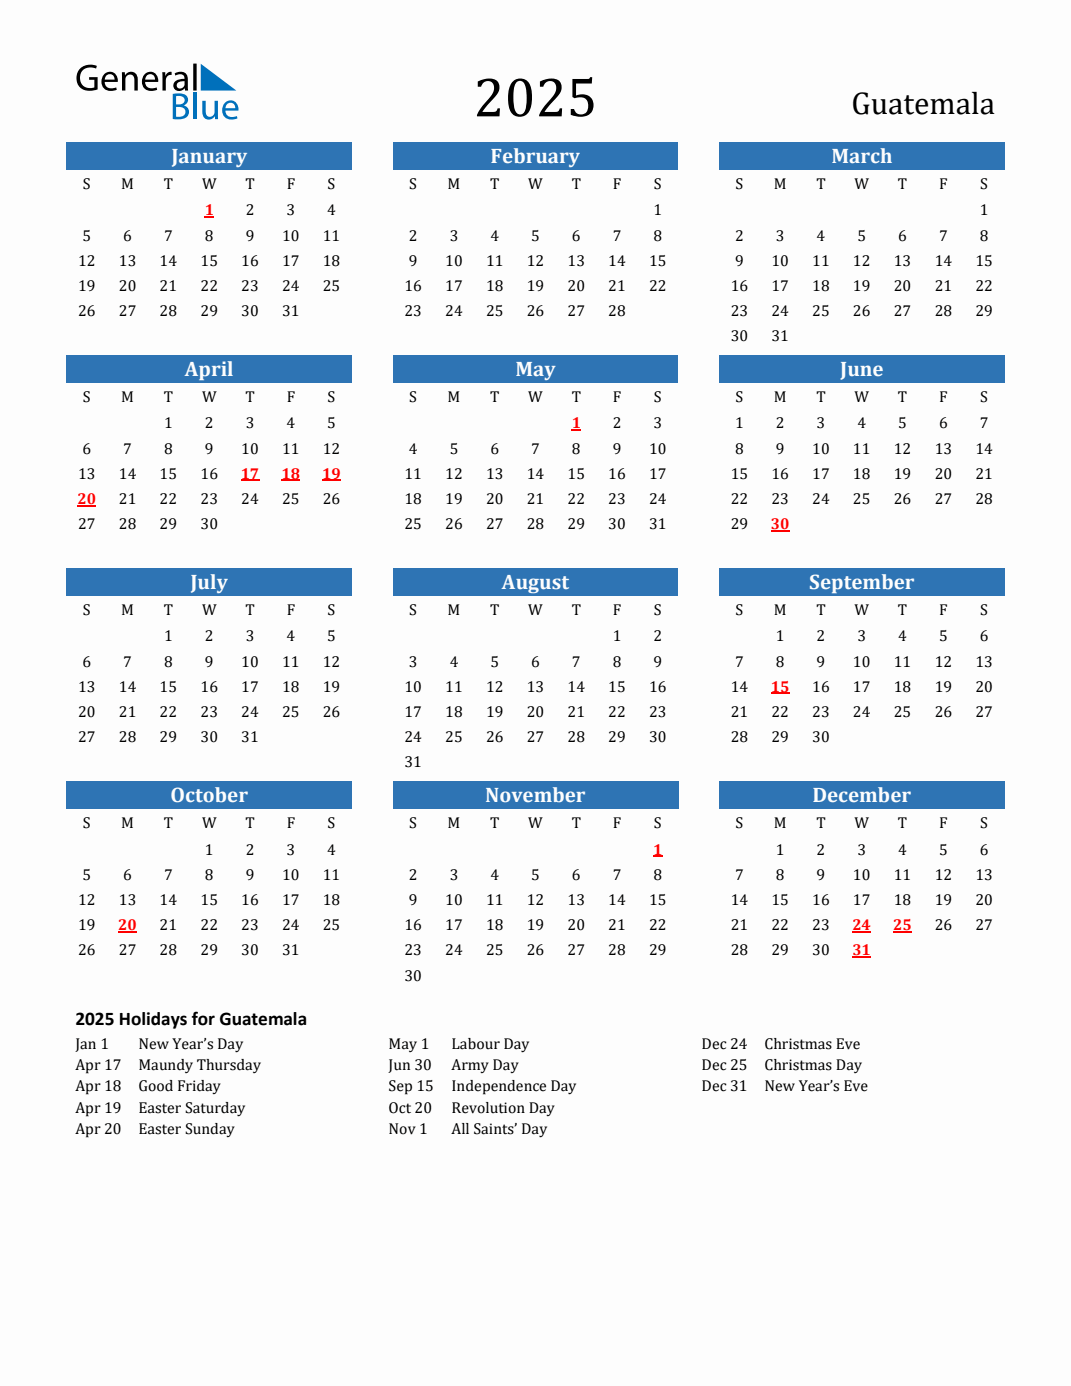 General Motors Holiday Calendar 2025